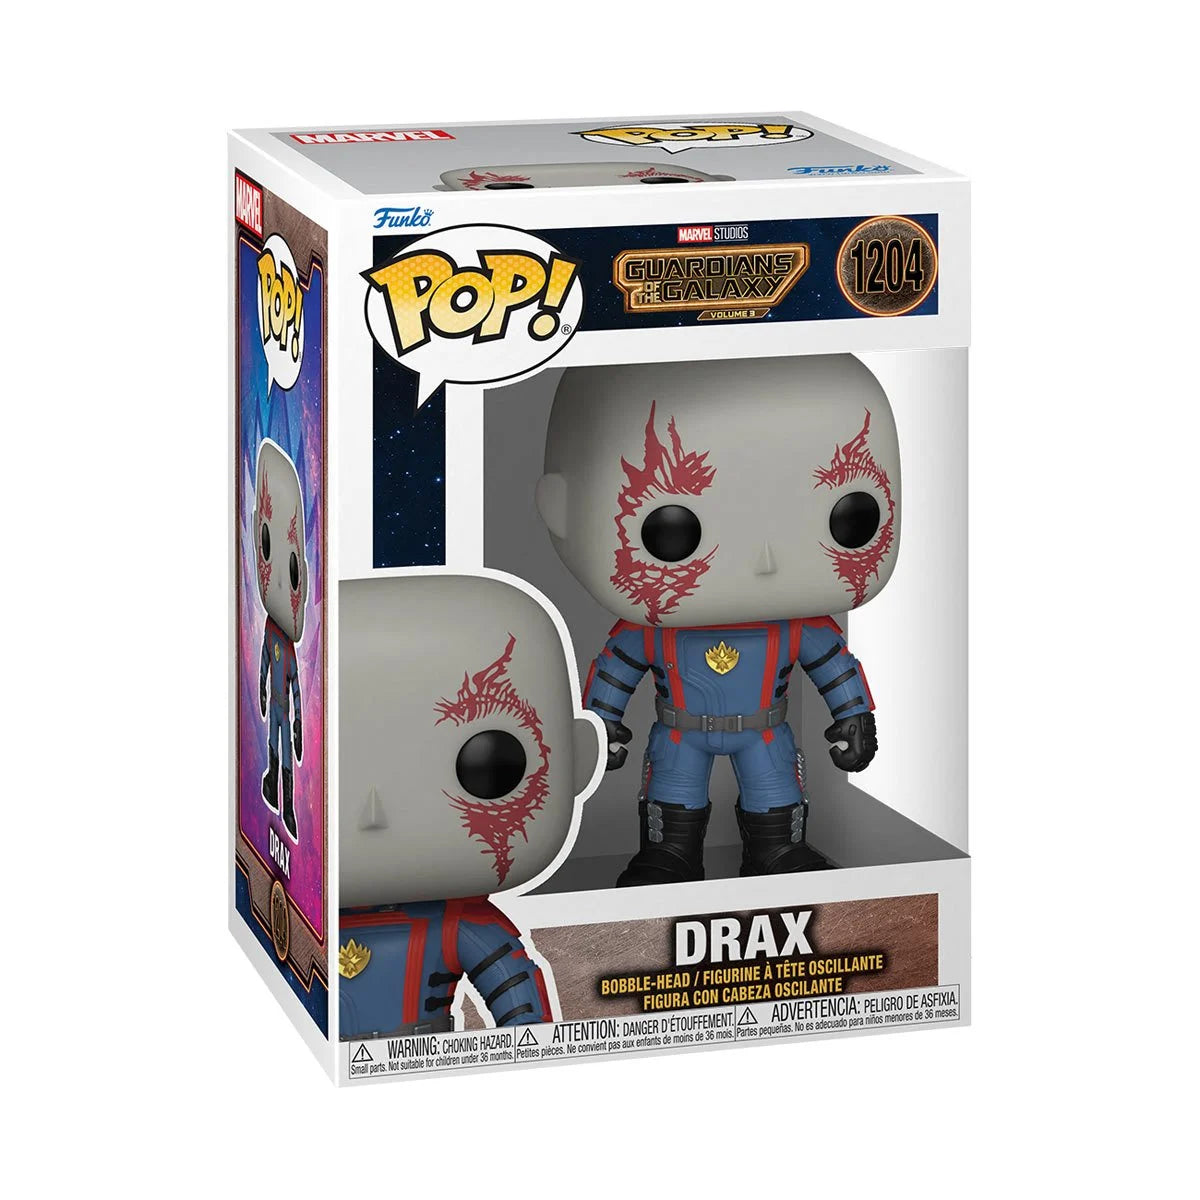 Drax Guardians of the Galaxy Volume 3 Pop! Vinyl Figure